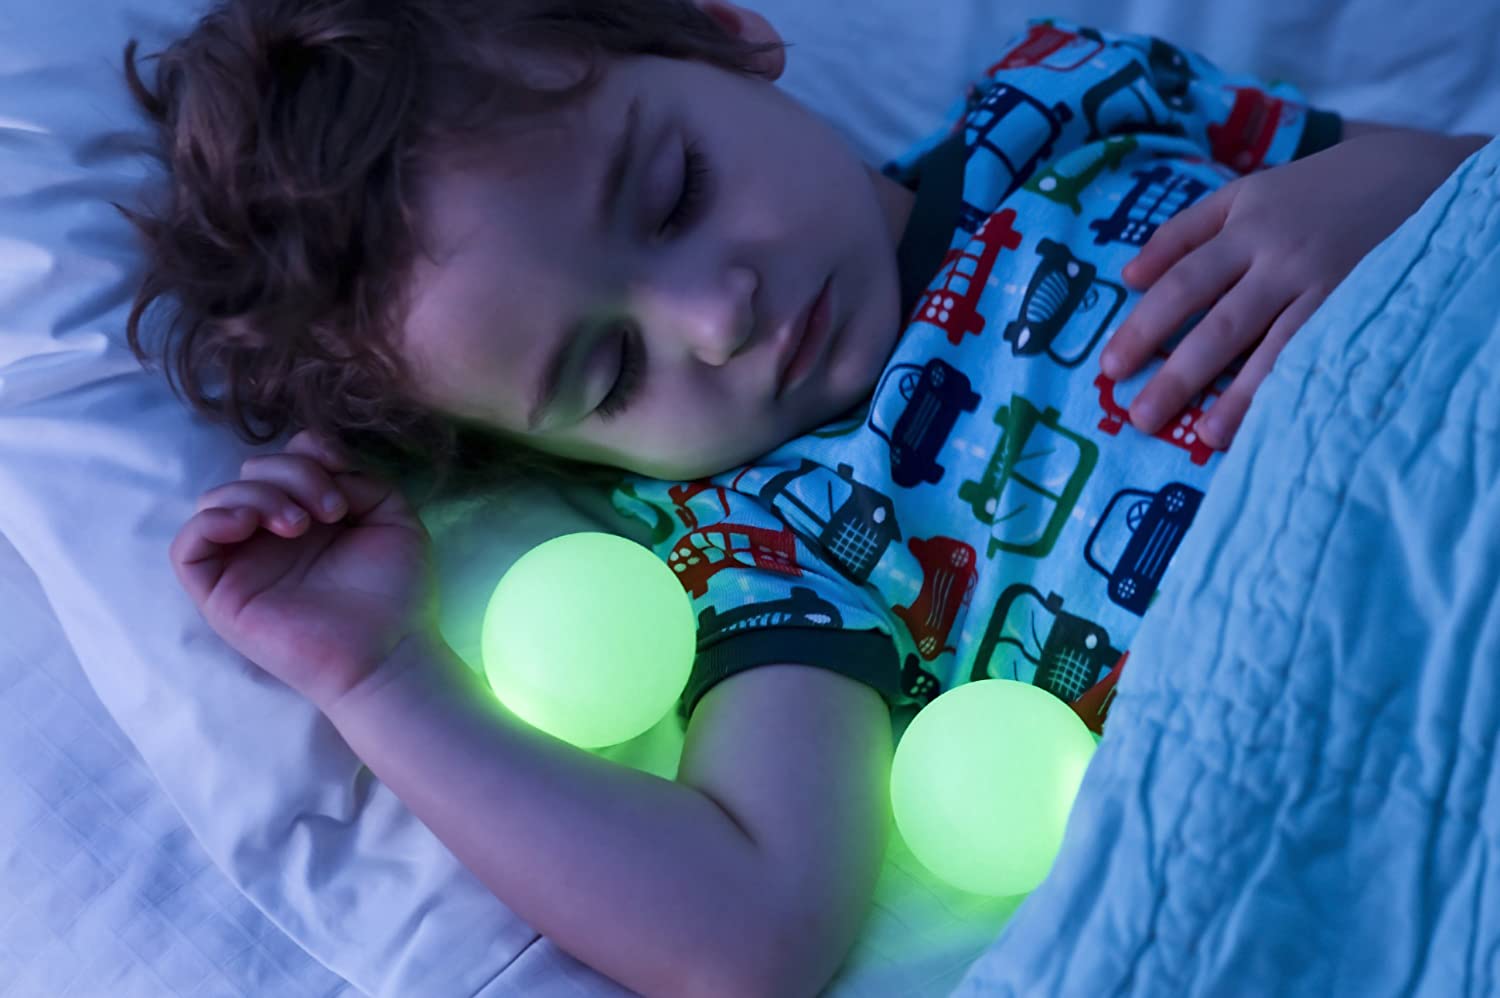 Removable Balls Glowing Nightlight Lamp - Glow Balls Kids Lamp